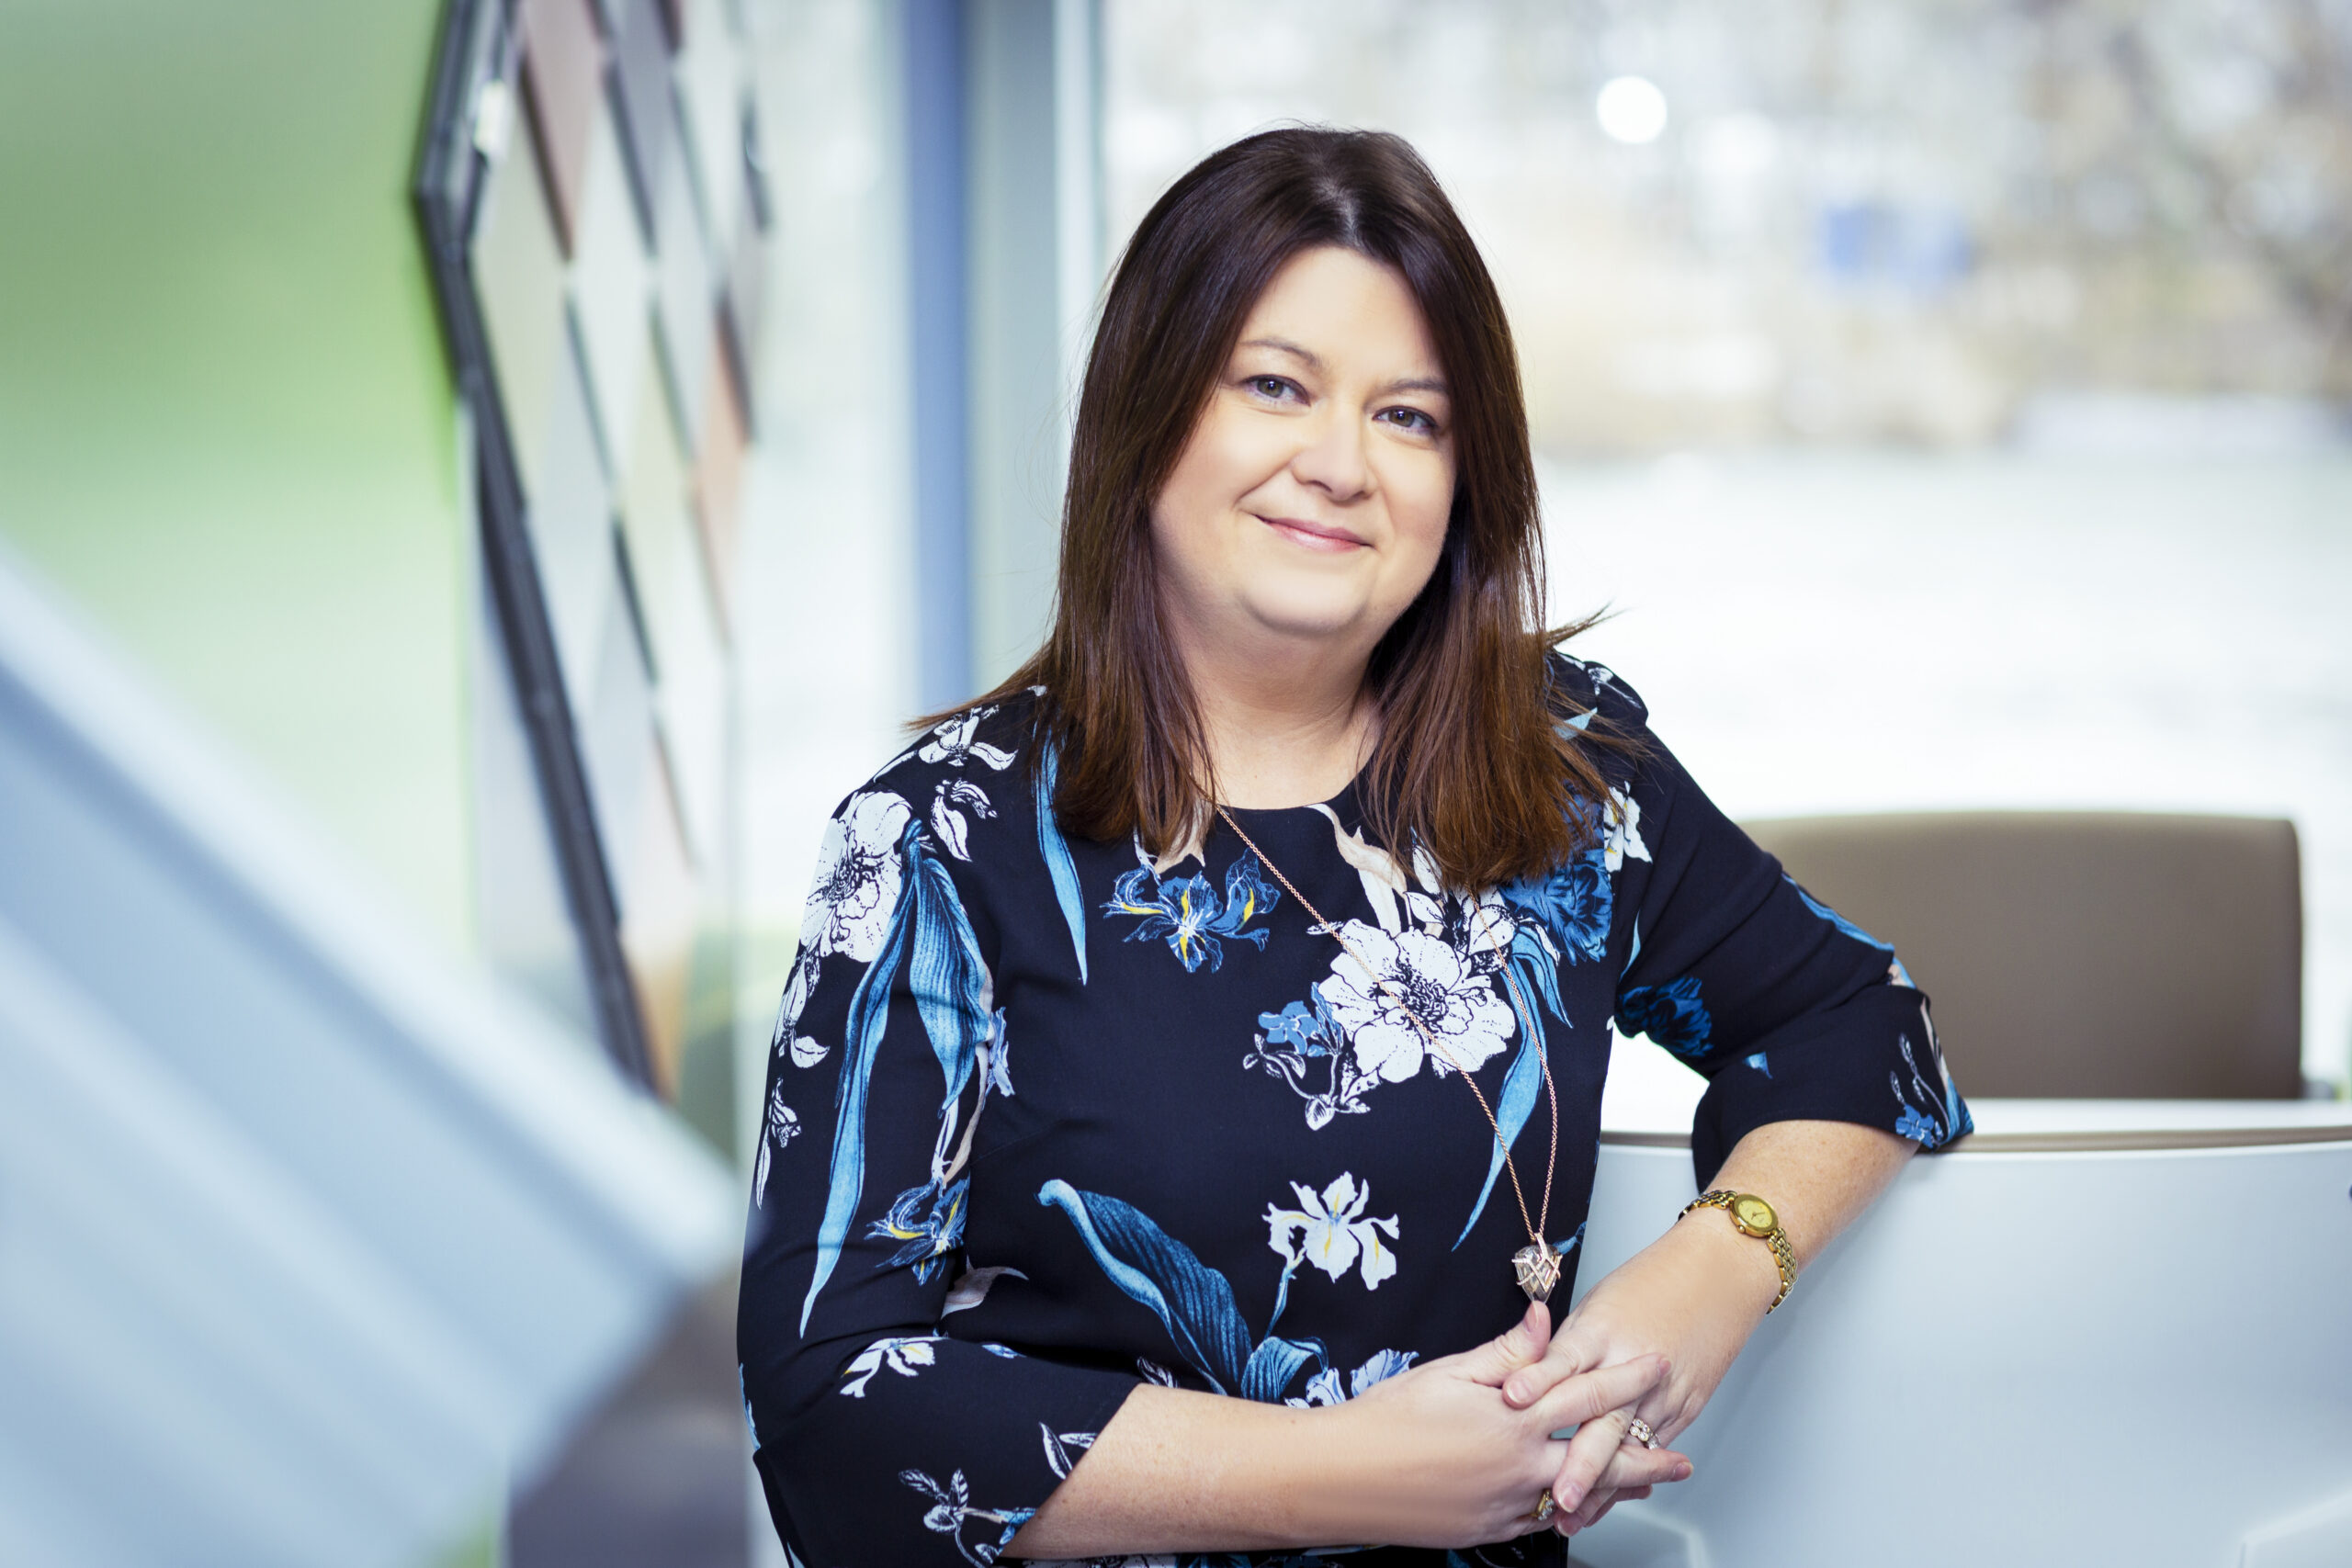 Business headshot of female professional, Cardiff